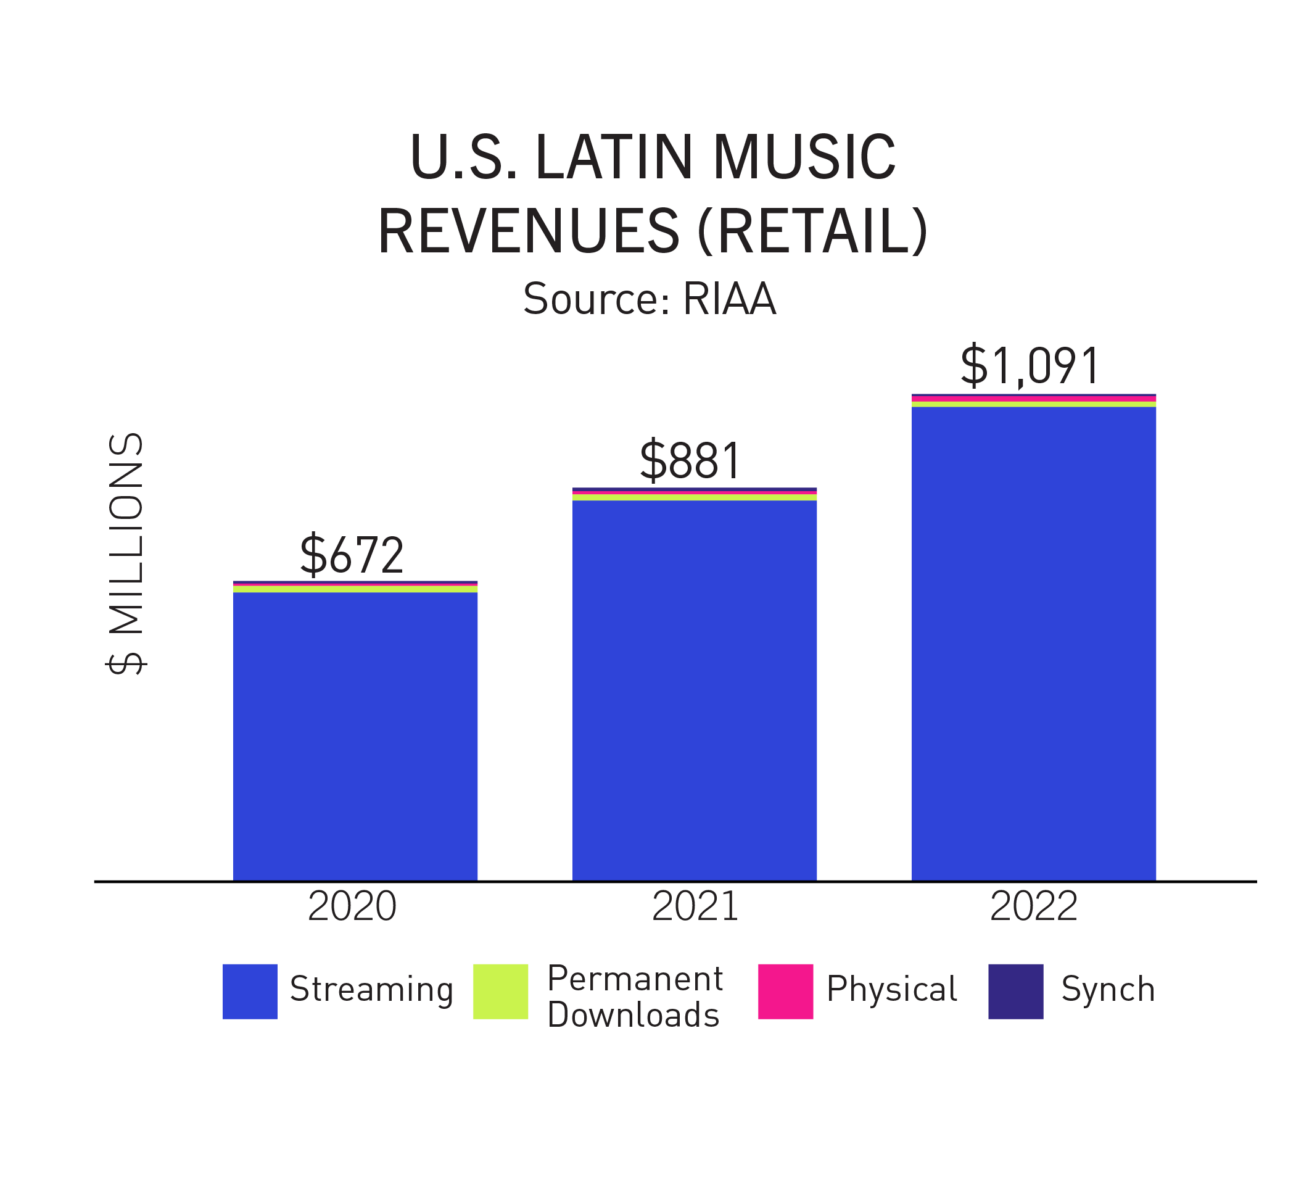 Official Latin music surpassed 1 billion in US recorded music revenue